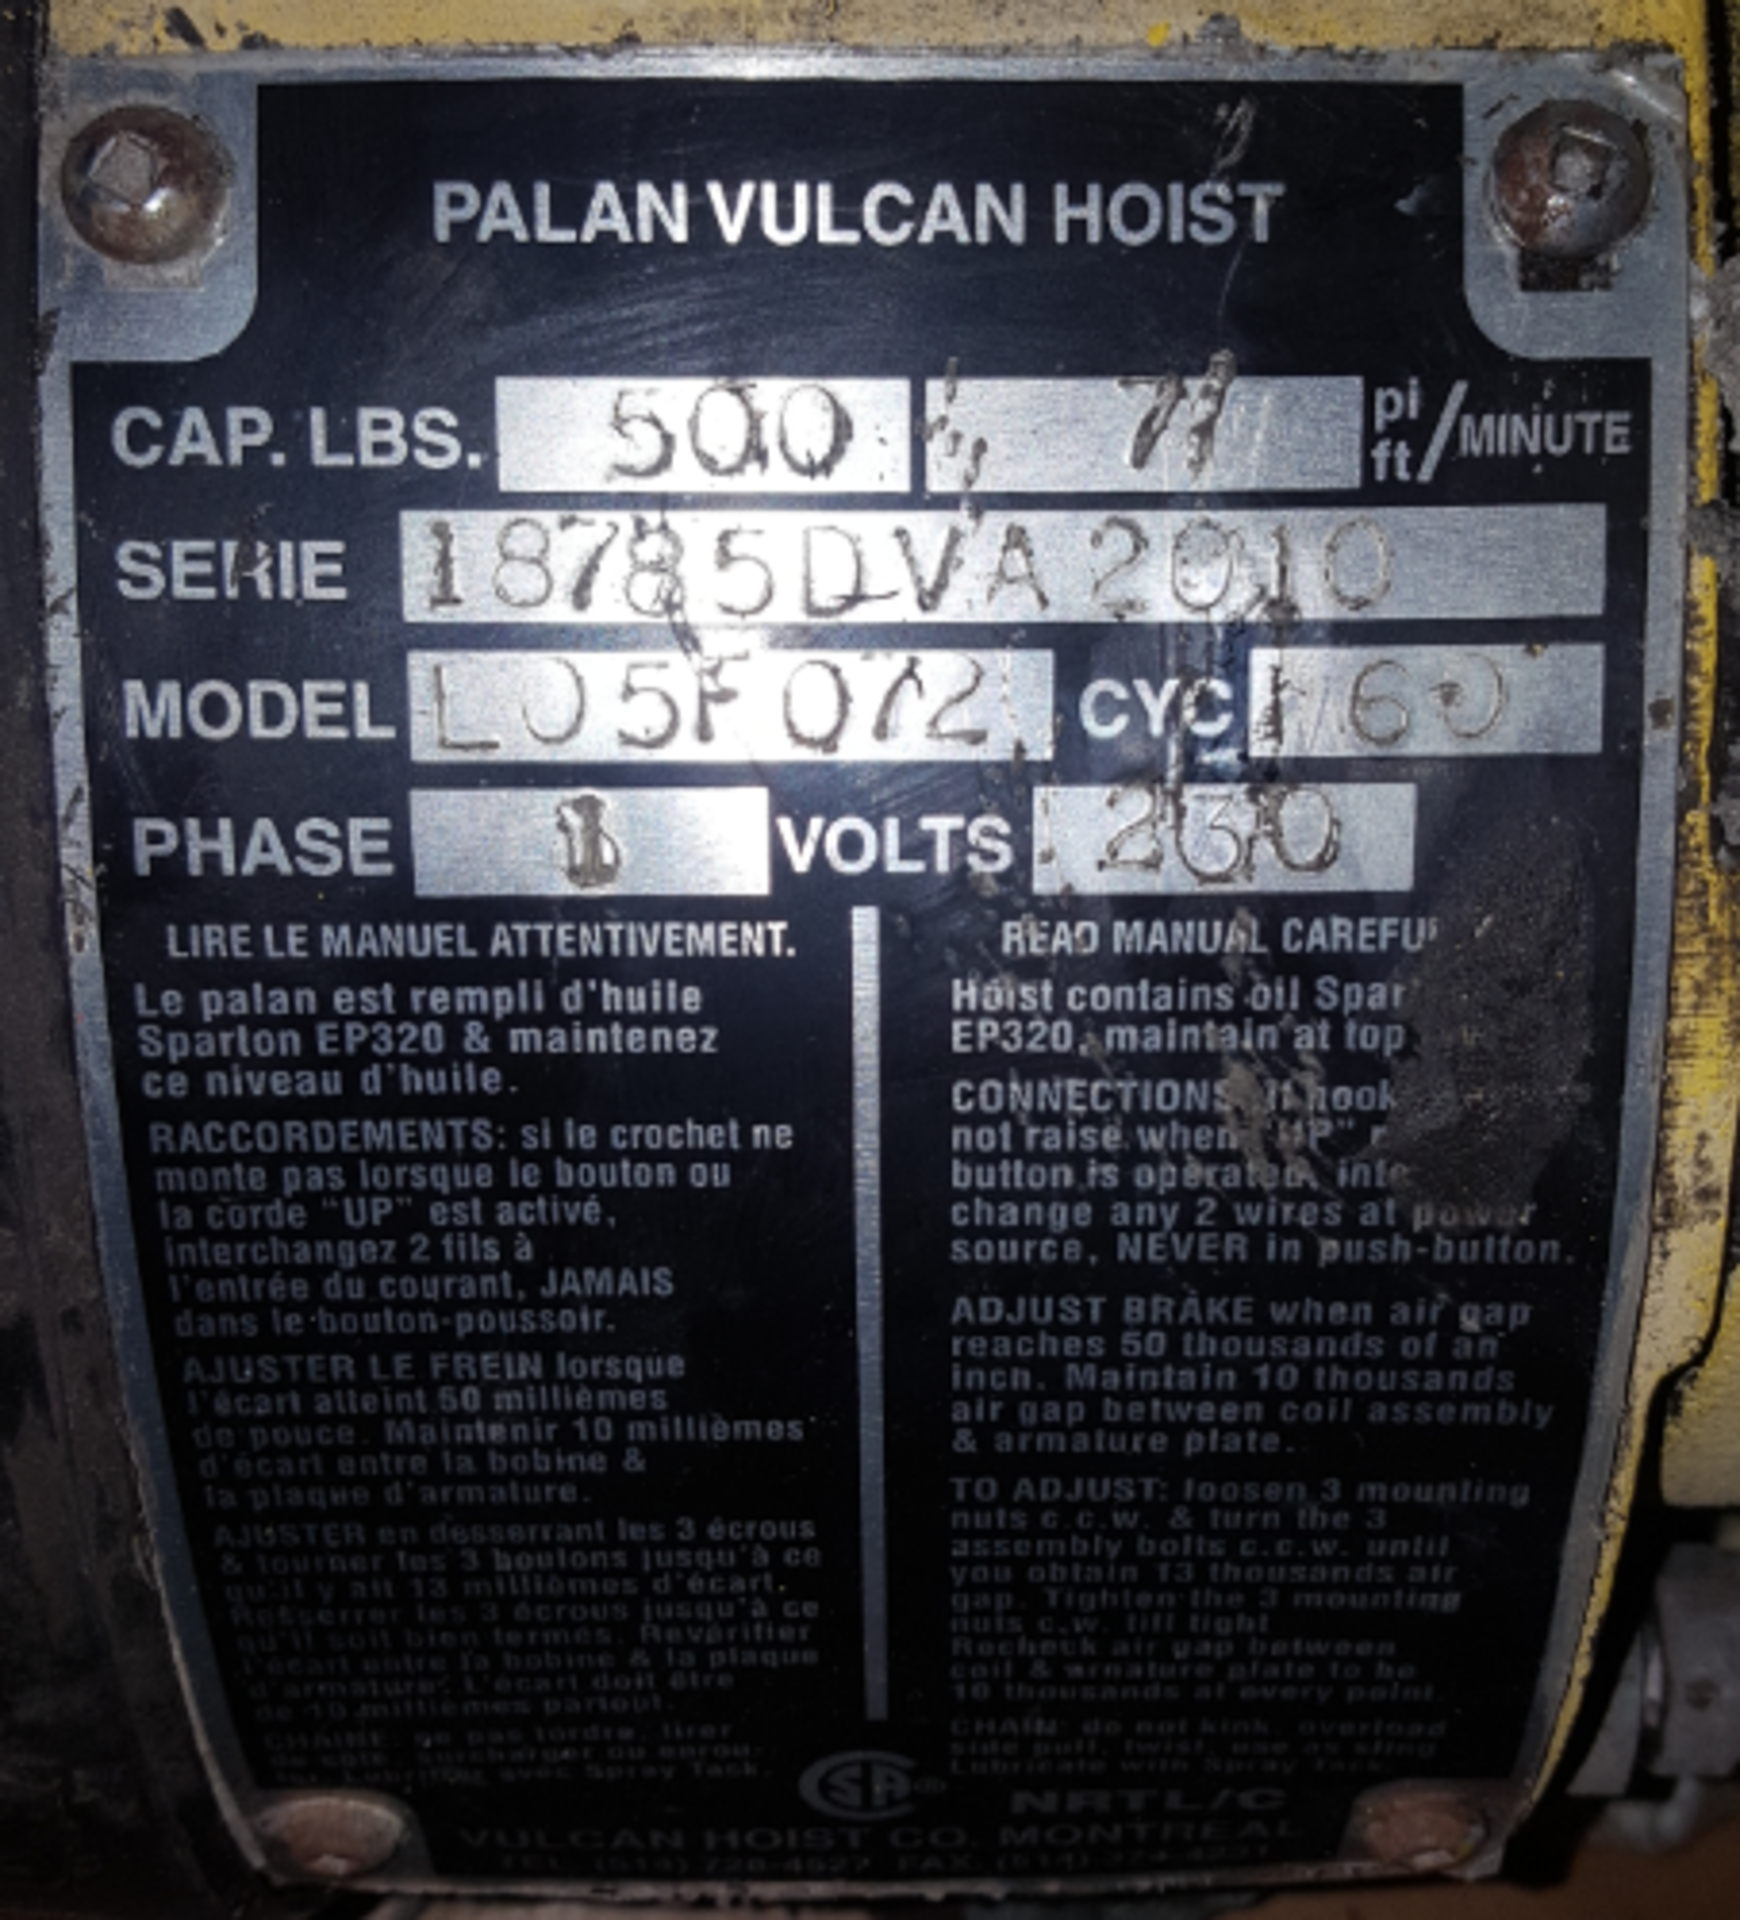 vulcan-hoist 1/4 ton Capacity 500 lbs Volts 230 Serie : 1878DVA2010 *Item location : Montreal - Image 3 of 5